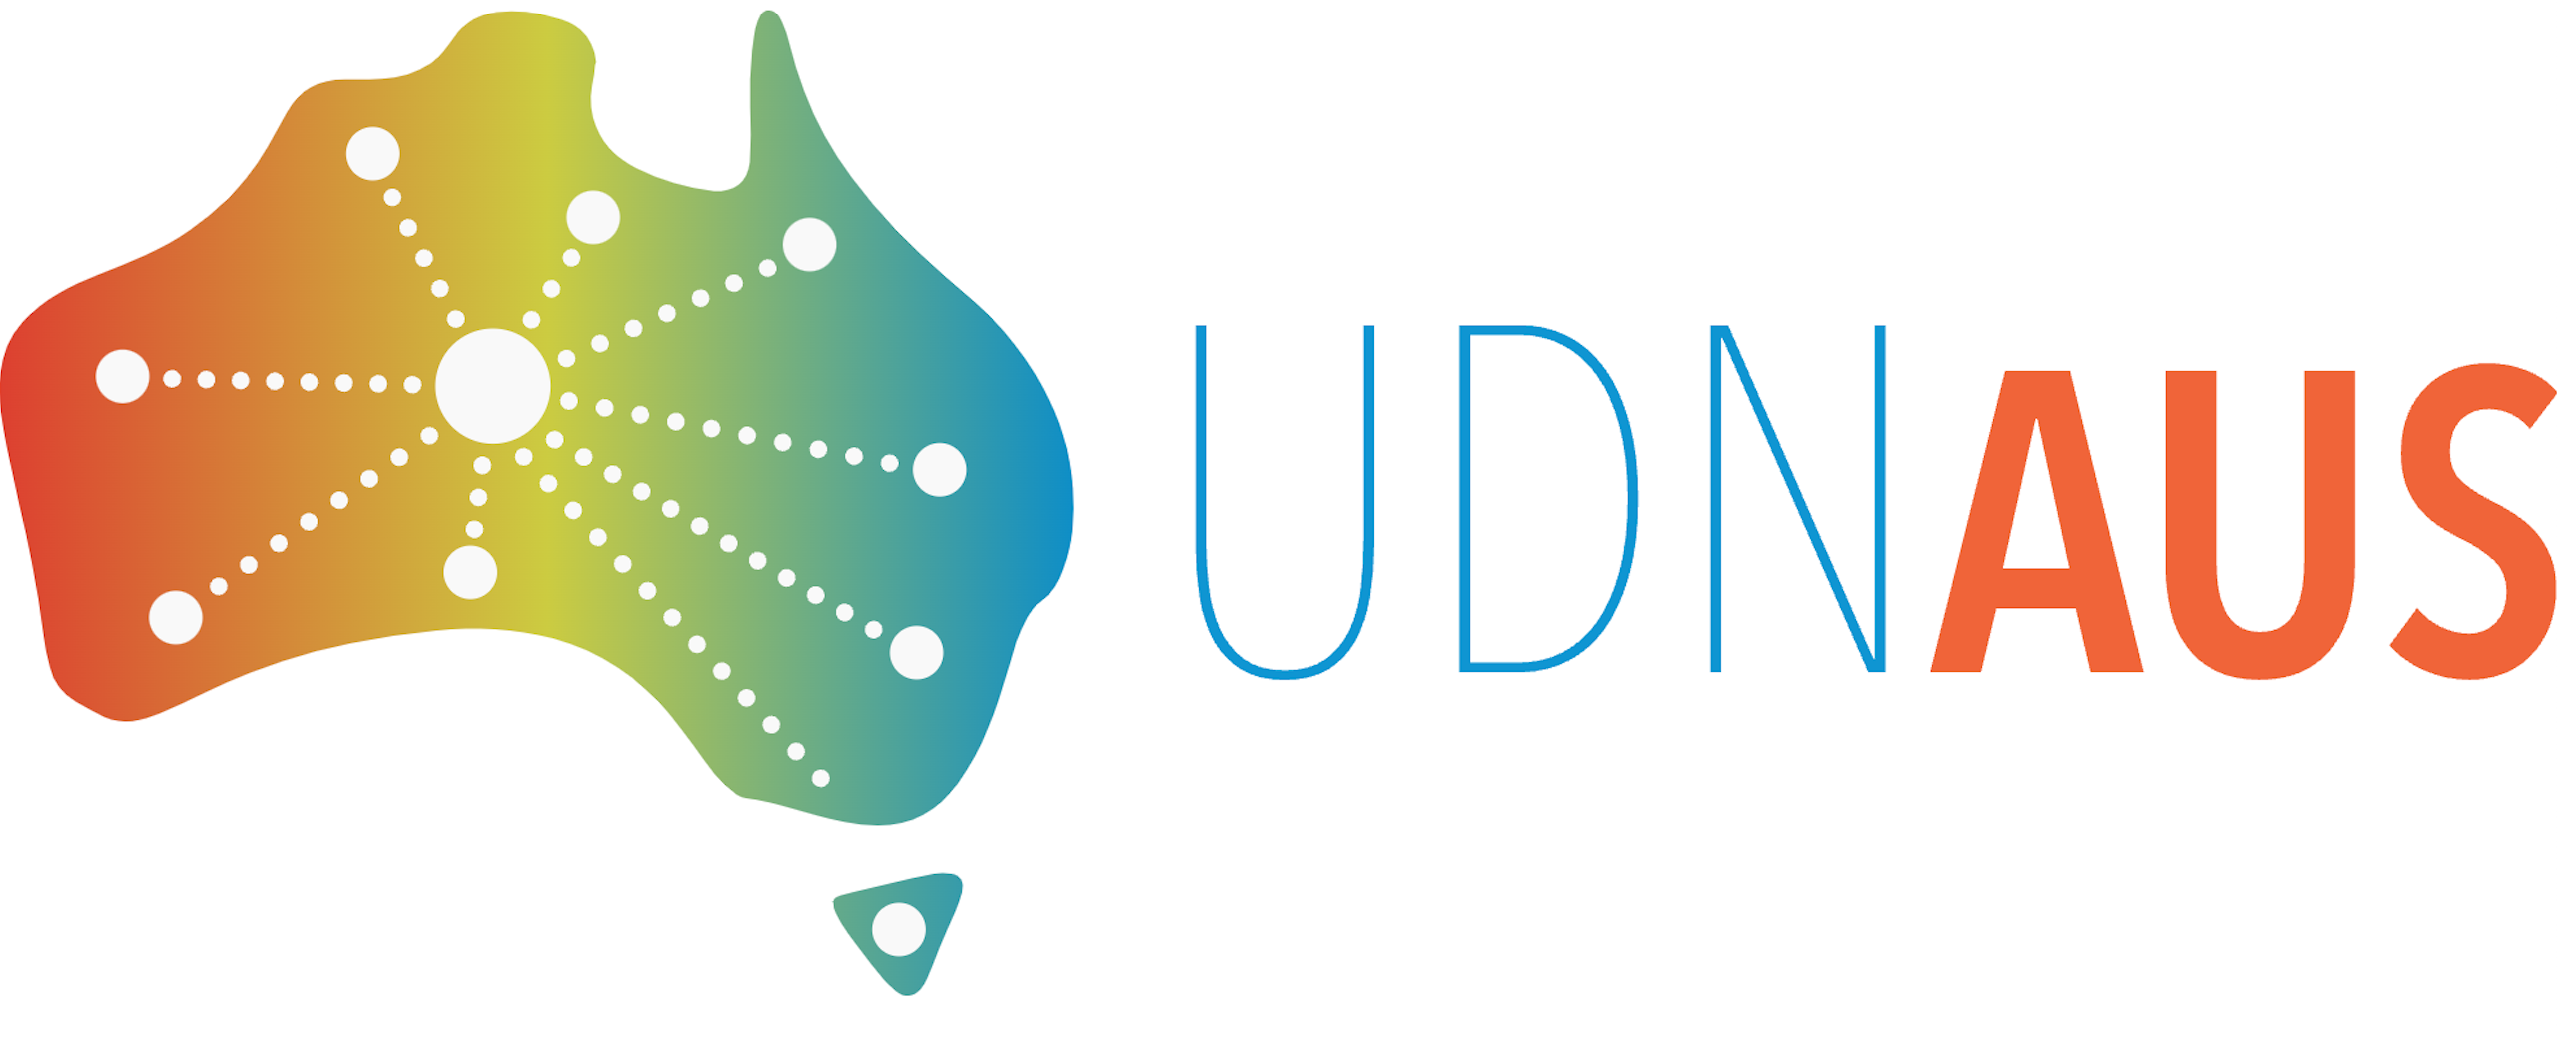 The Australian Undiagnosed Diseases Network (UDN-Aus) logo